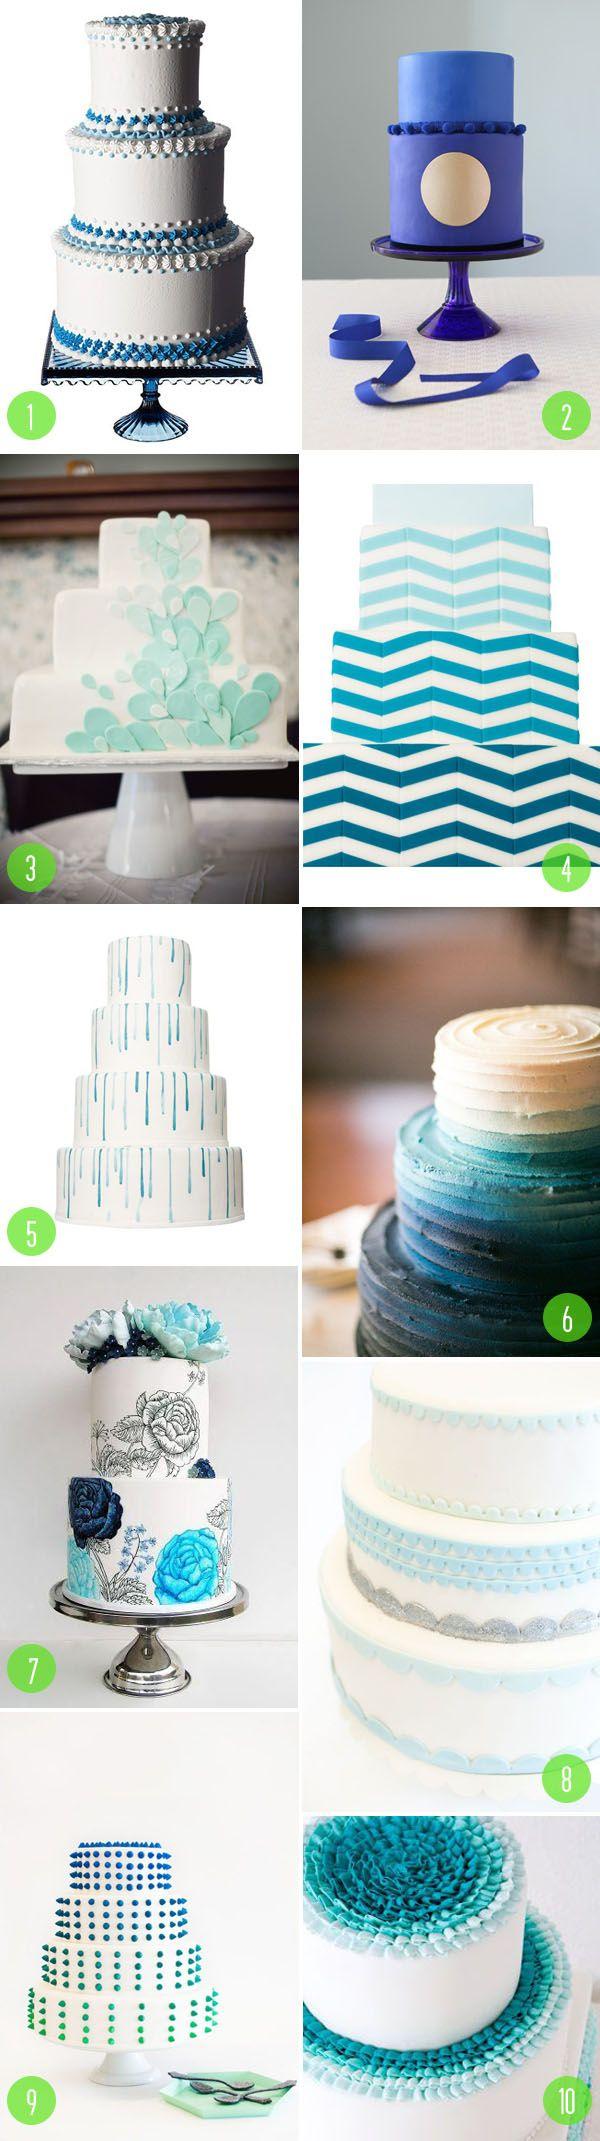 Mariage - Top 10: Gâteaux de mariage bleu